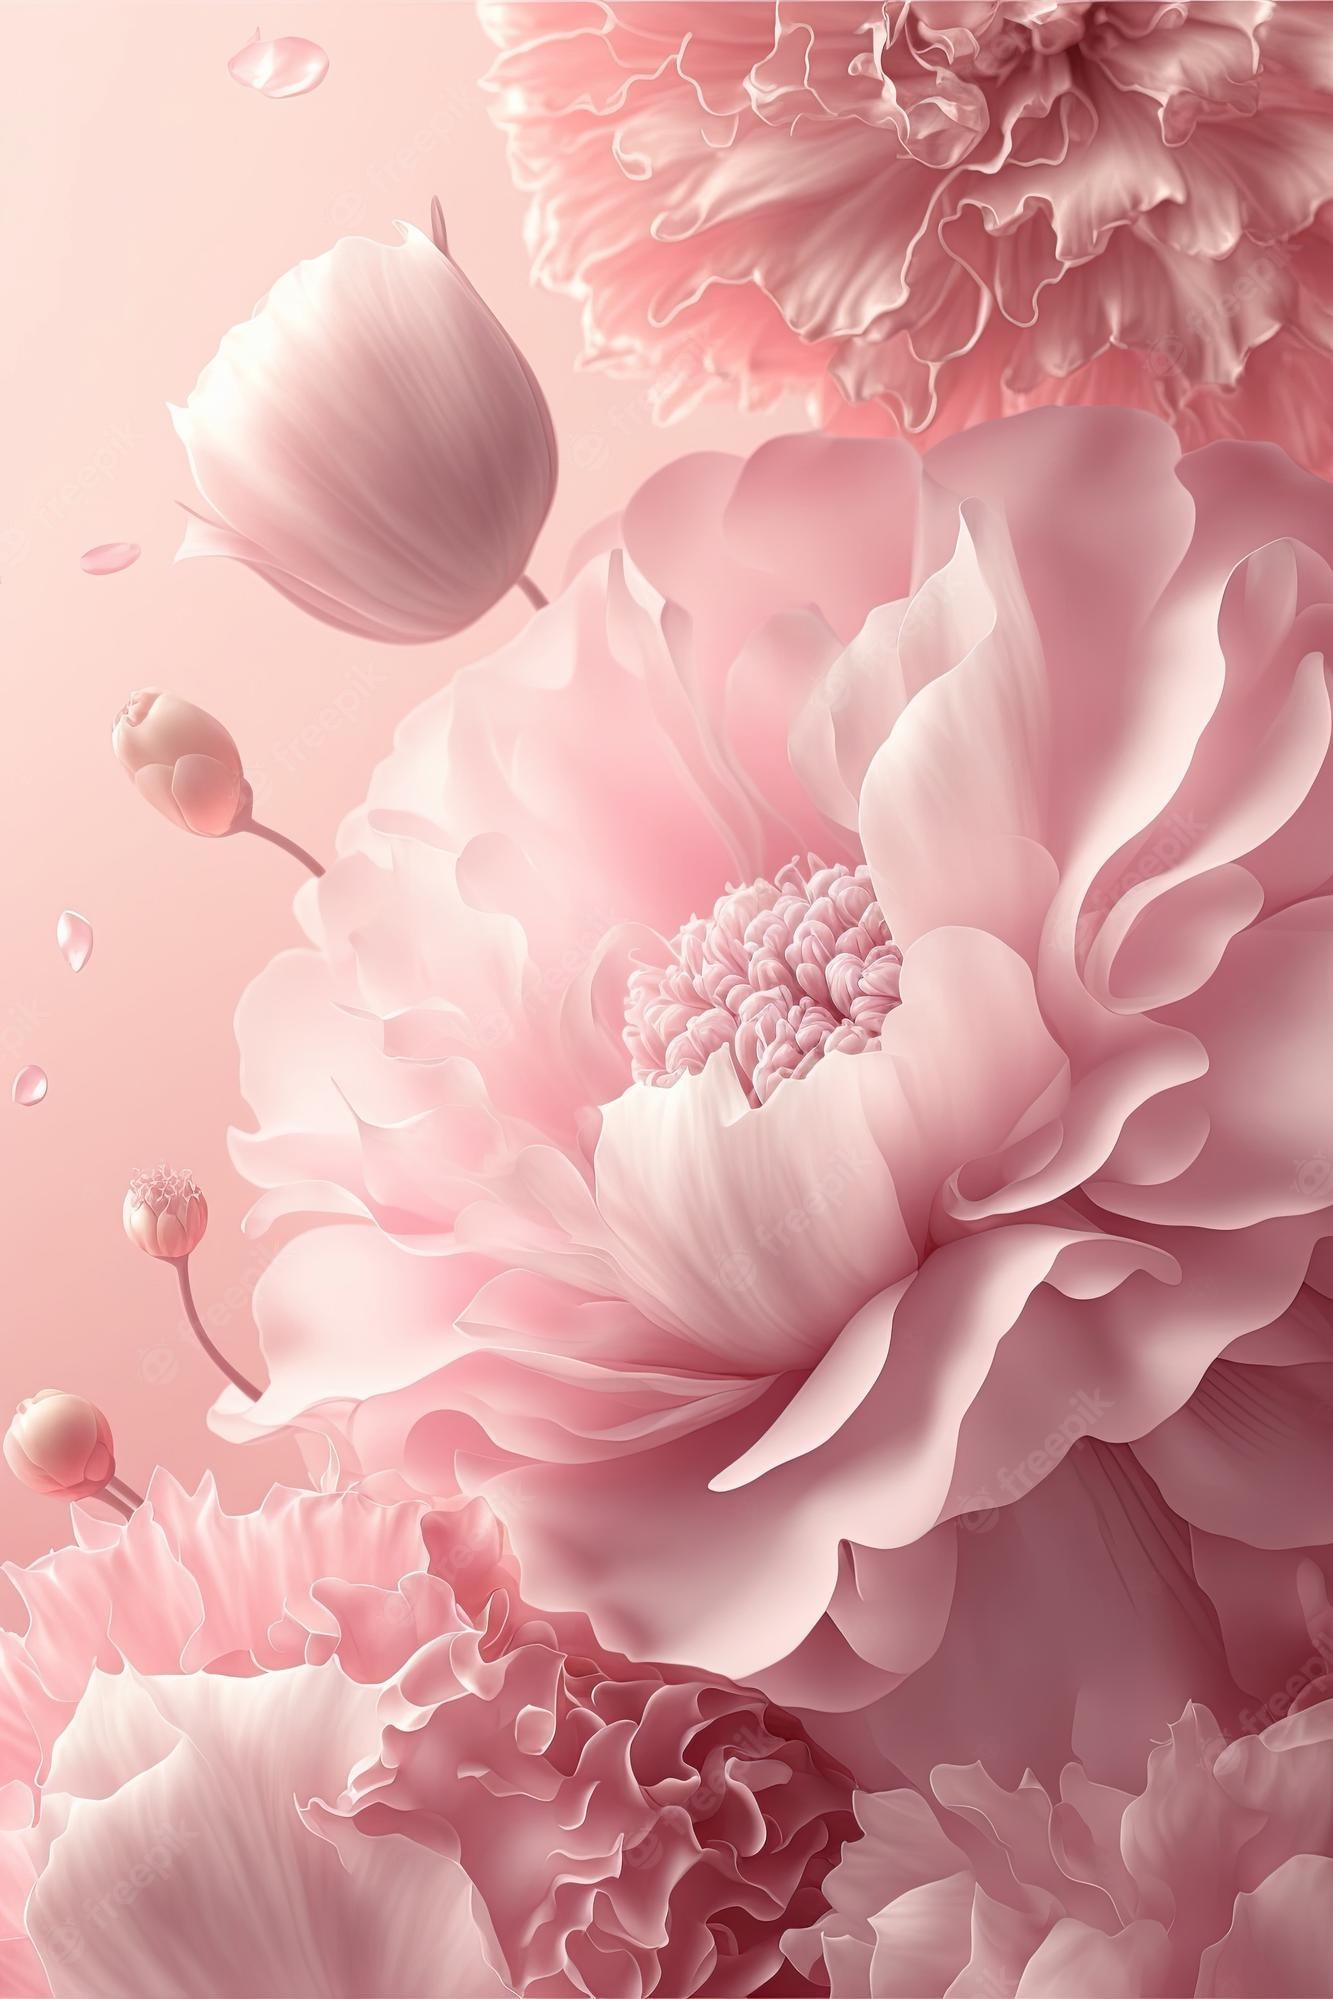 Premium Photo Delicate Romantic Pastel Pink Background With